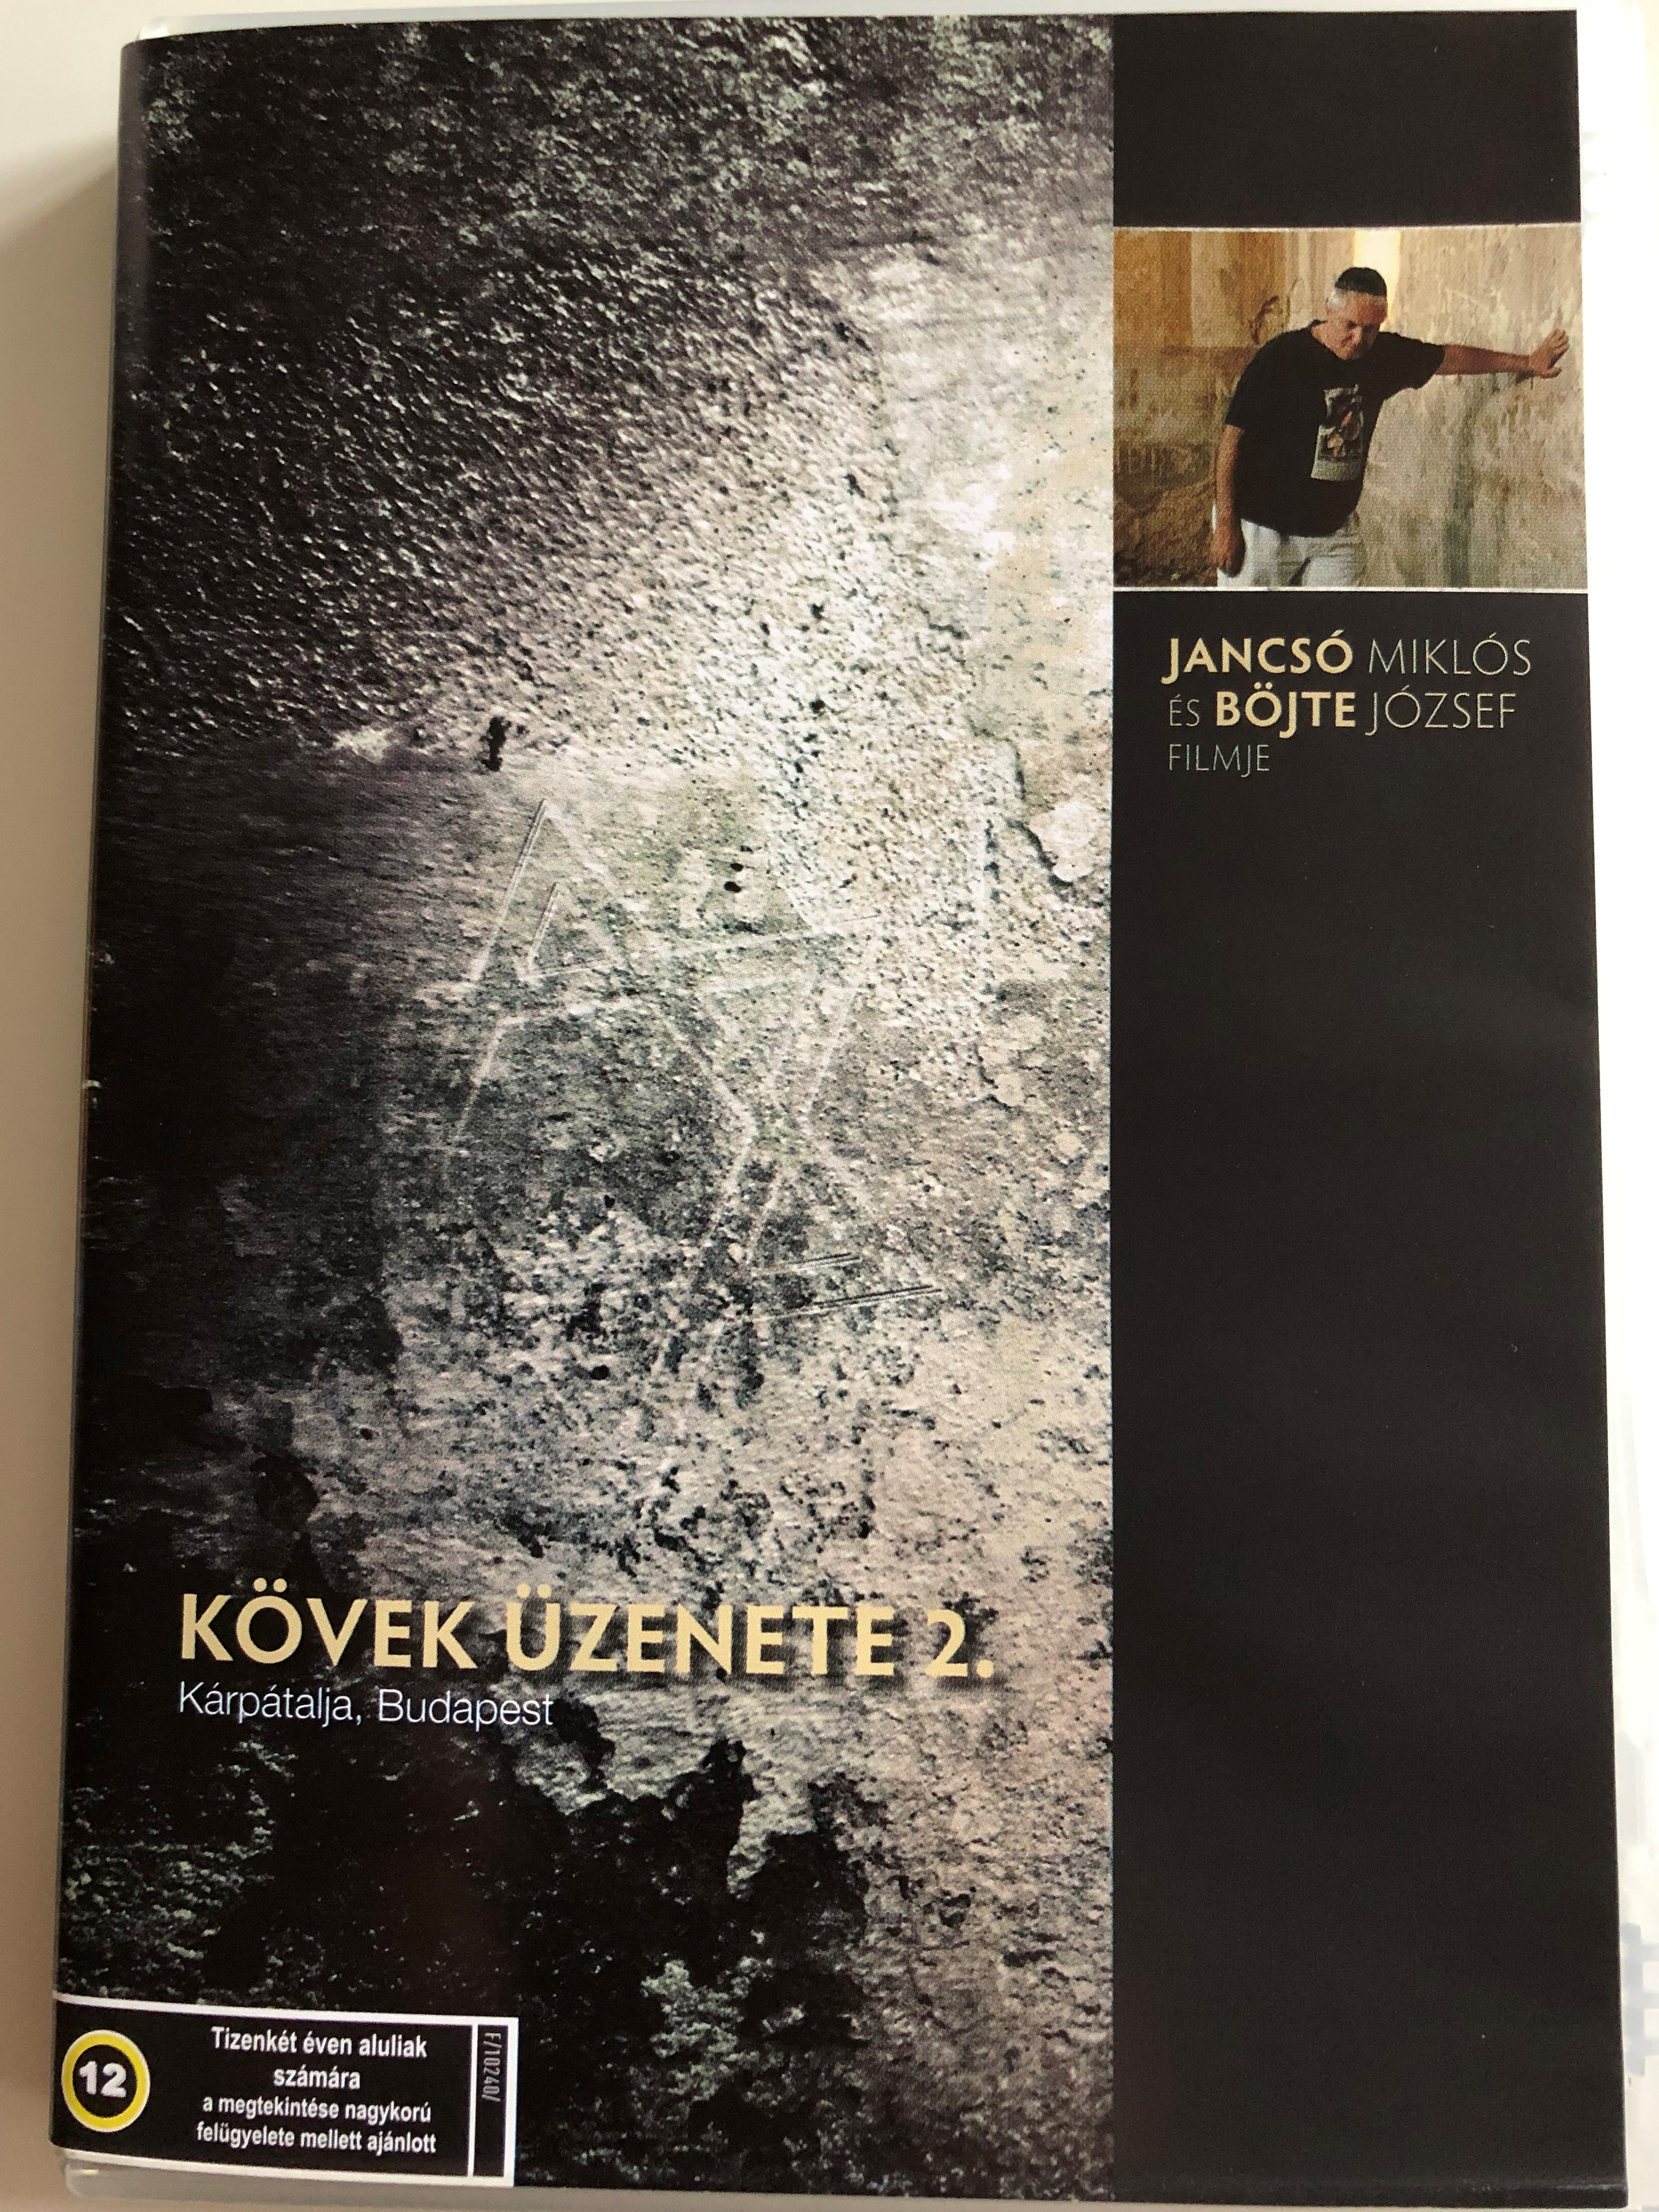 k-vek-zenete-2.-dvd-1994-k-rp-talja-budapest-directed-by-jancs-mikl-s-b-jte-j-zsef-1.jpg